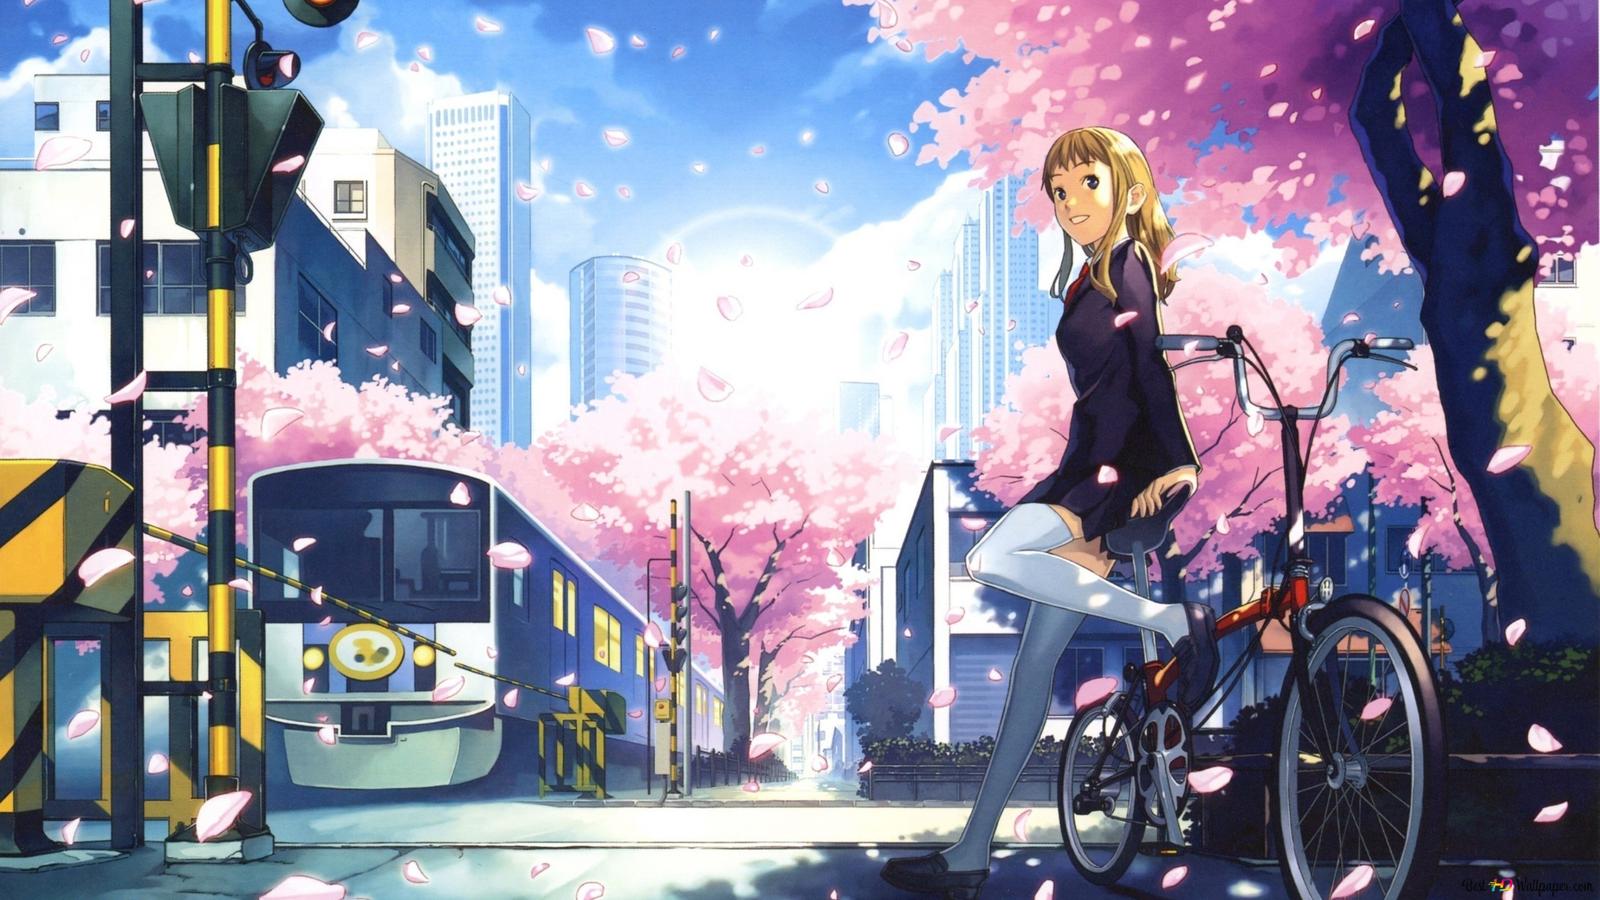 Anime scenery 2K wallpaper download